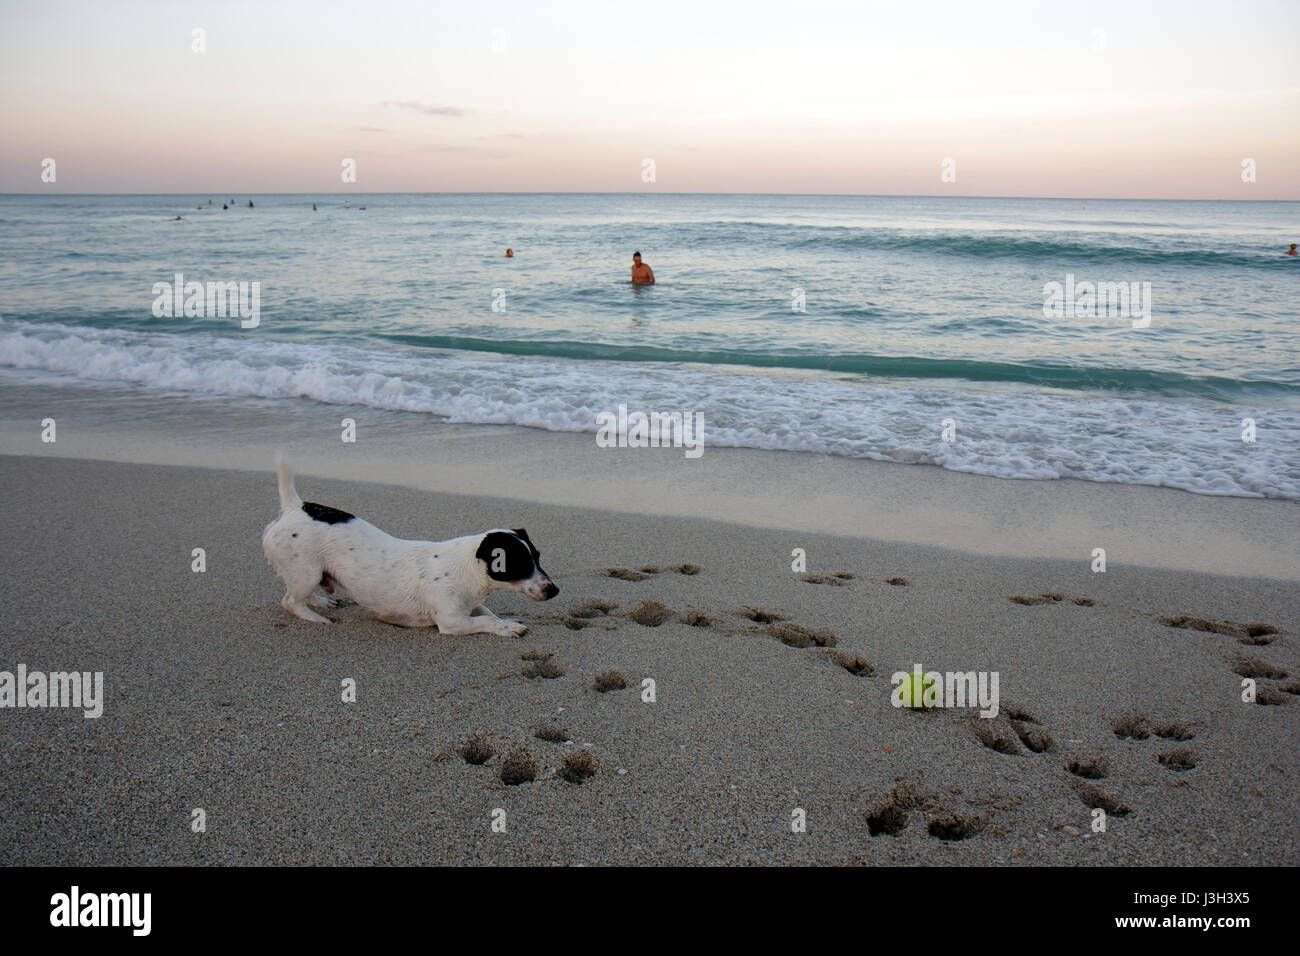 Miami Beach Florida,Atlantic Ocean,water,shore,public beach,sand,shore,seashore,dog,ball,pet,play,paw print,Jack Russell terrier,surf,FL080911025 Stock Photo